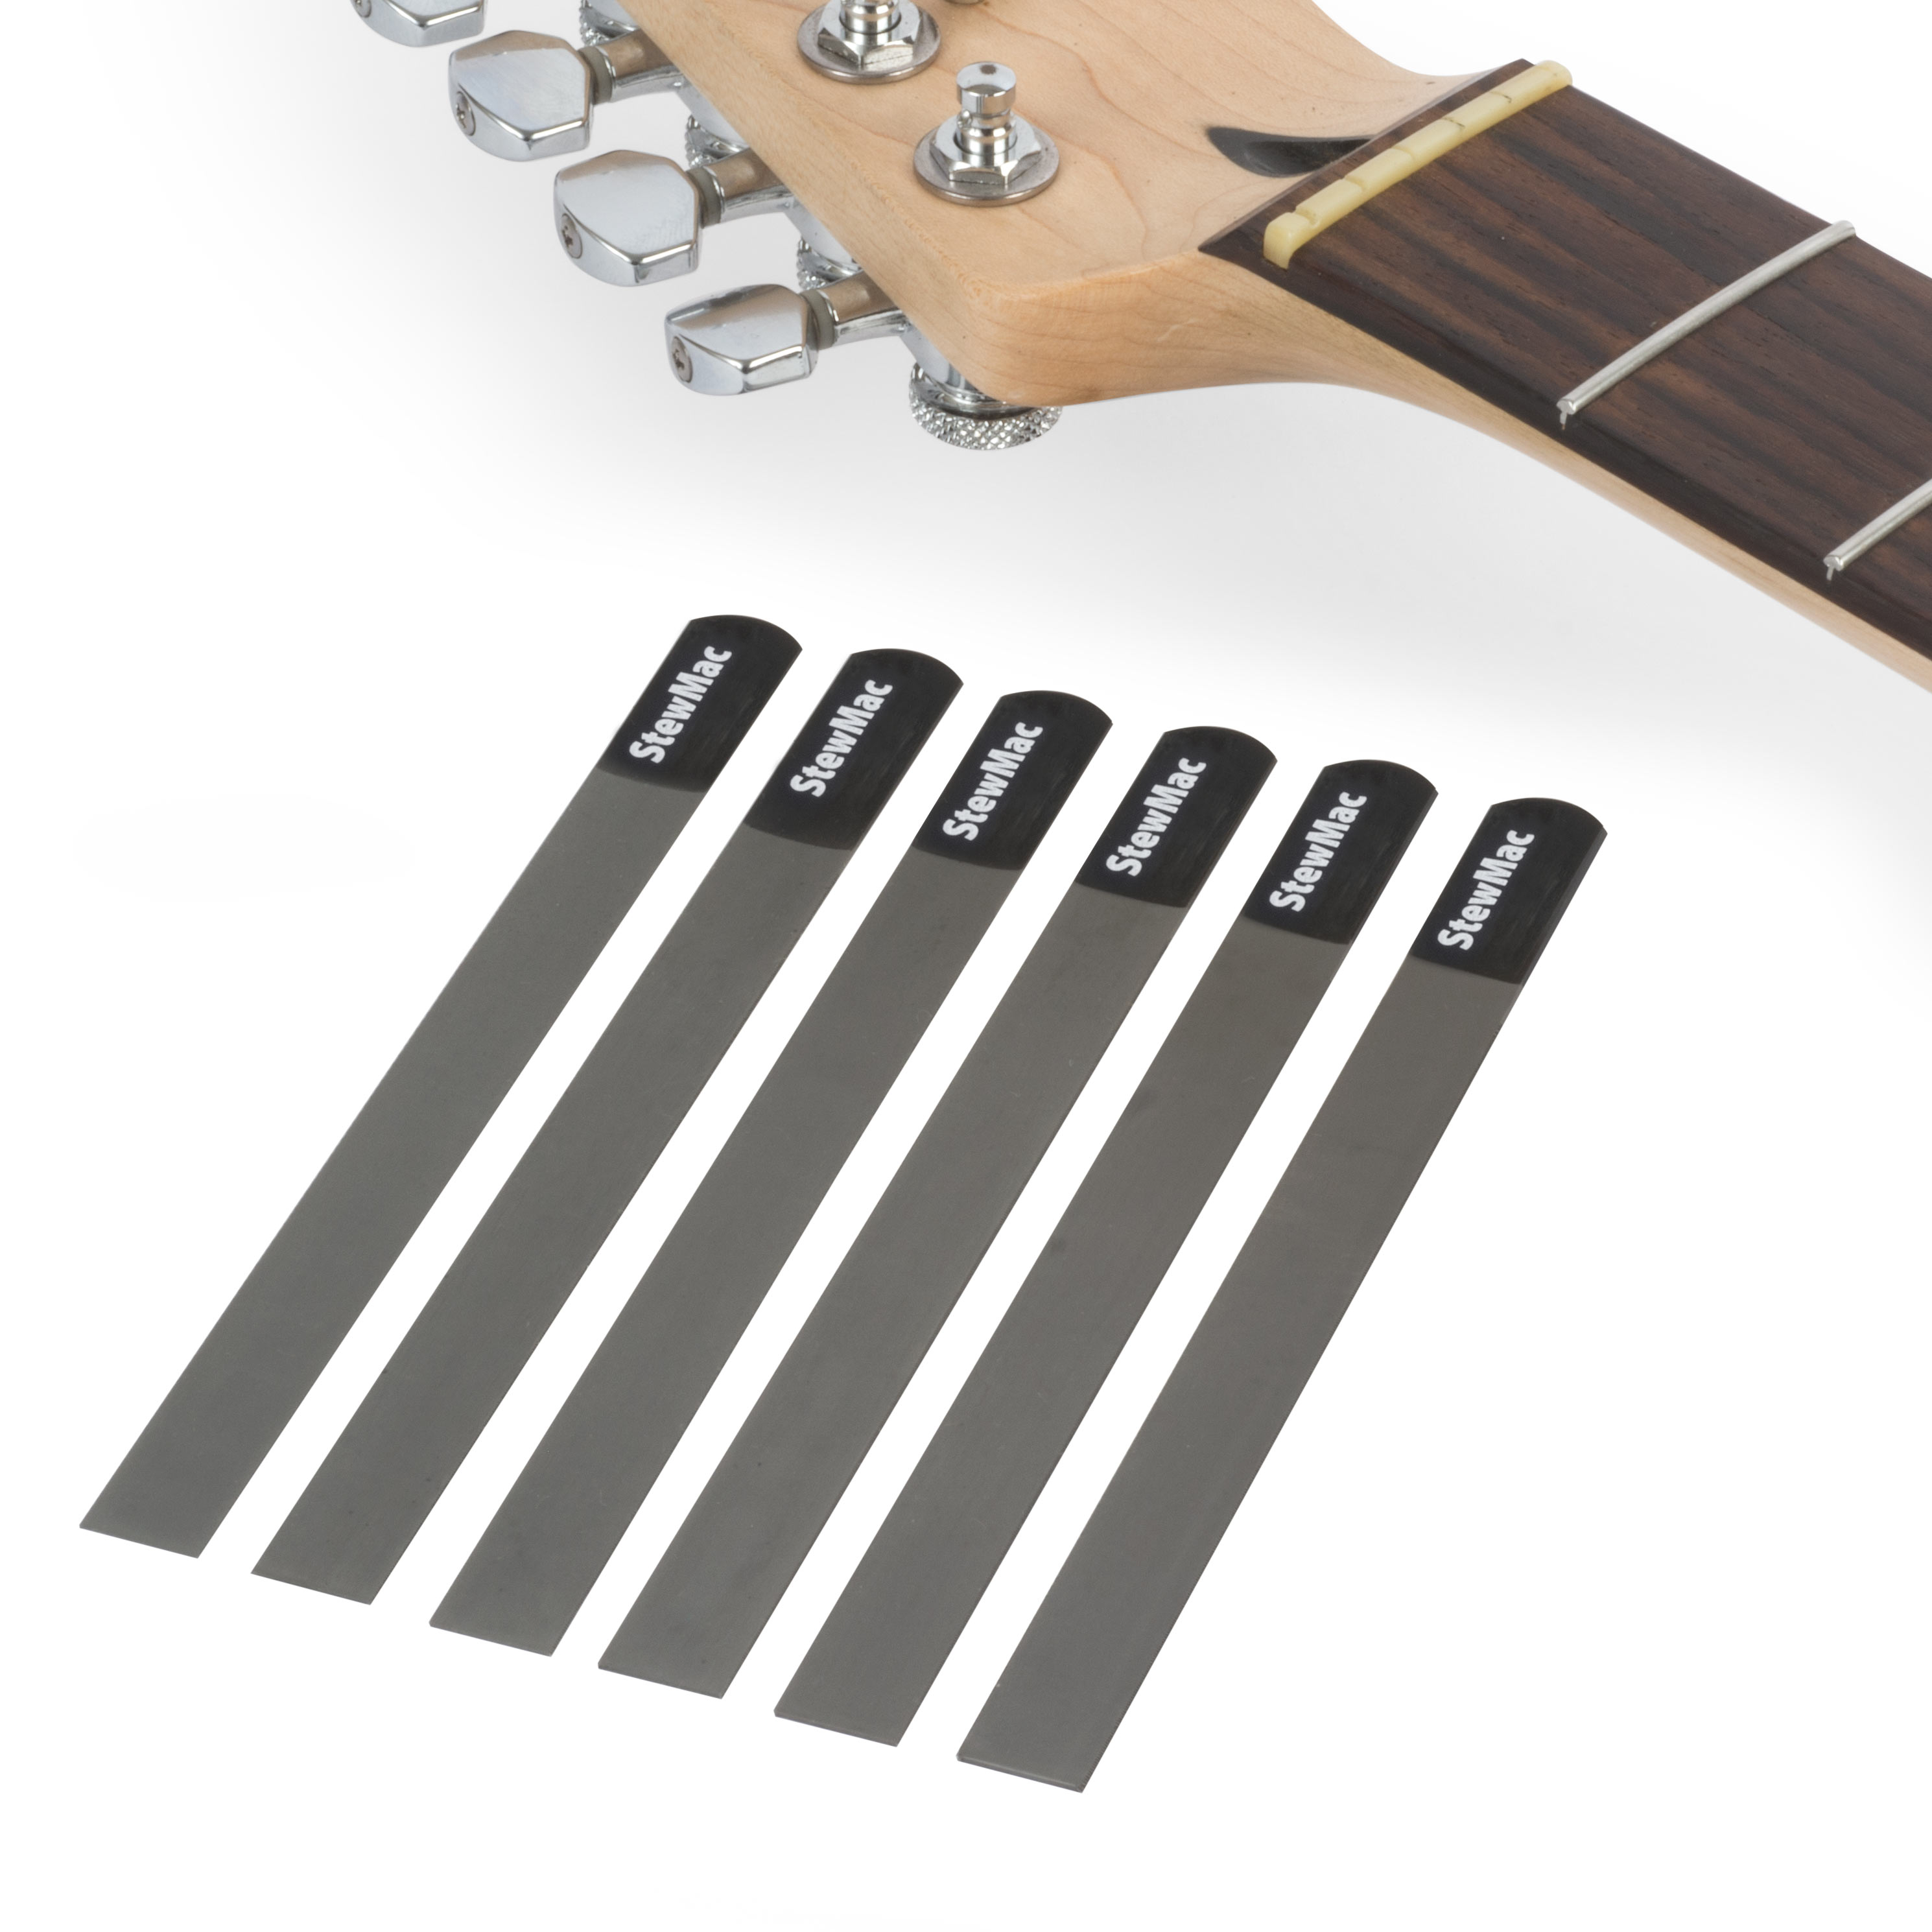 ammoon Guitar Nut Bridge Saddle File Set 13 Round Needles Files 1 Flat File & Grinding Stone Luthiers Tool for Guitar Banjo Mandolin Bass String Groove Slot 